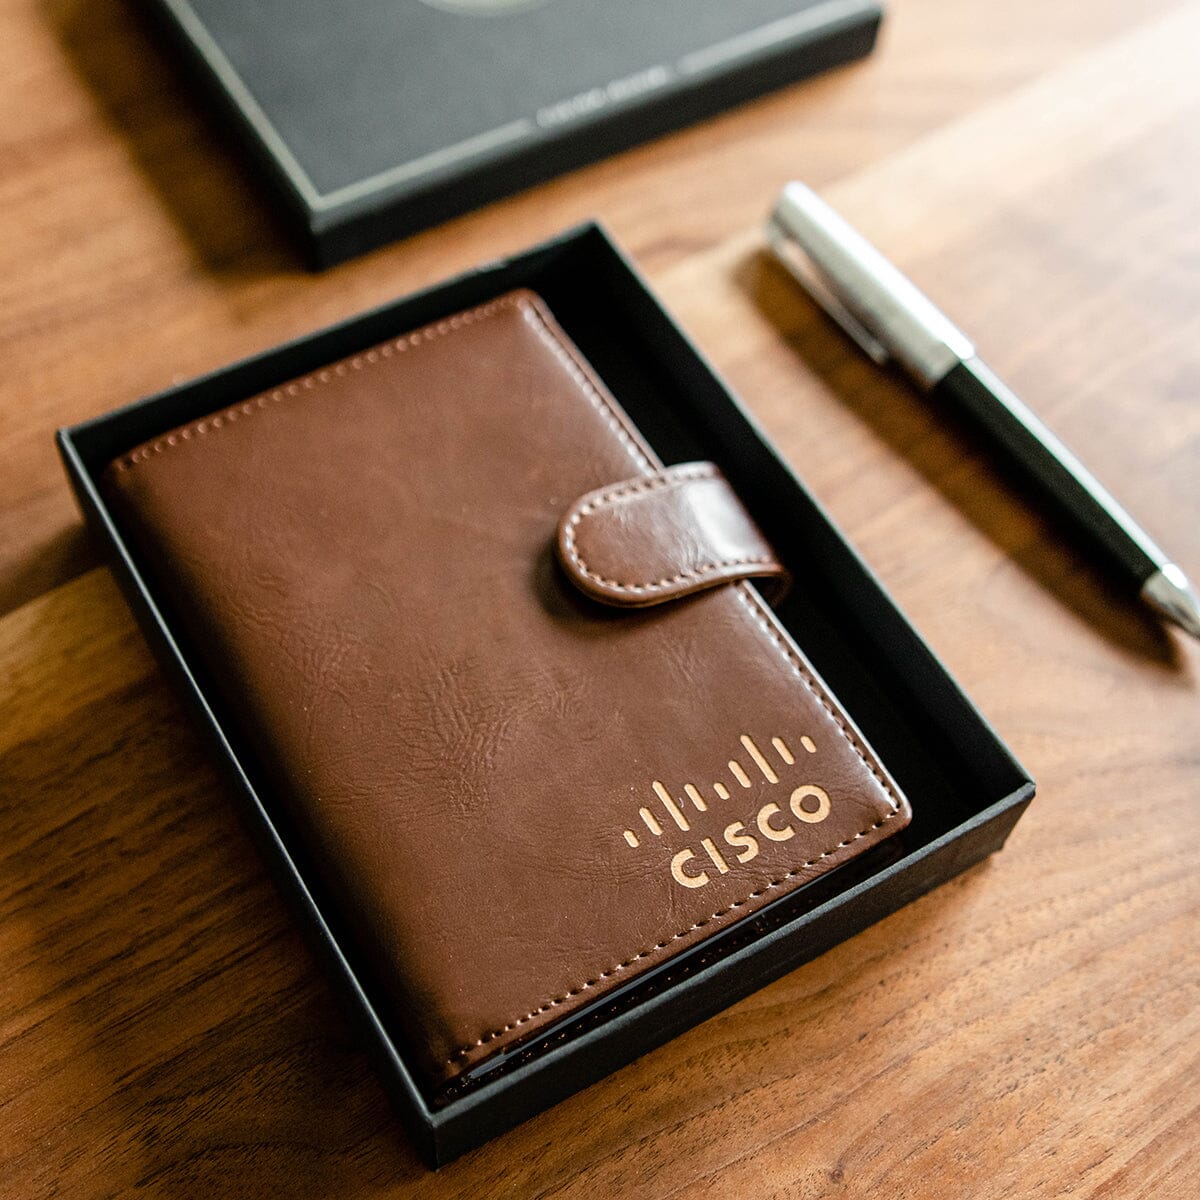 Branded Pocket Journal Swanky Badger Brown 